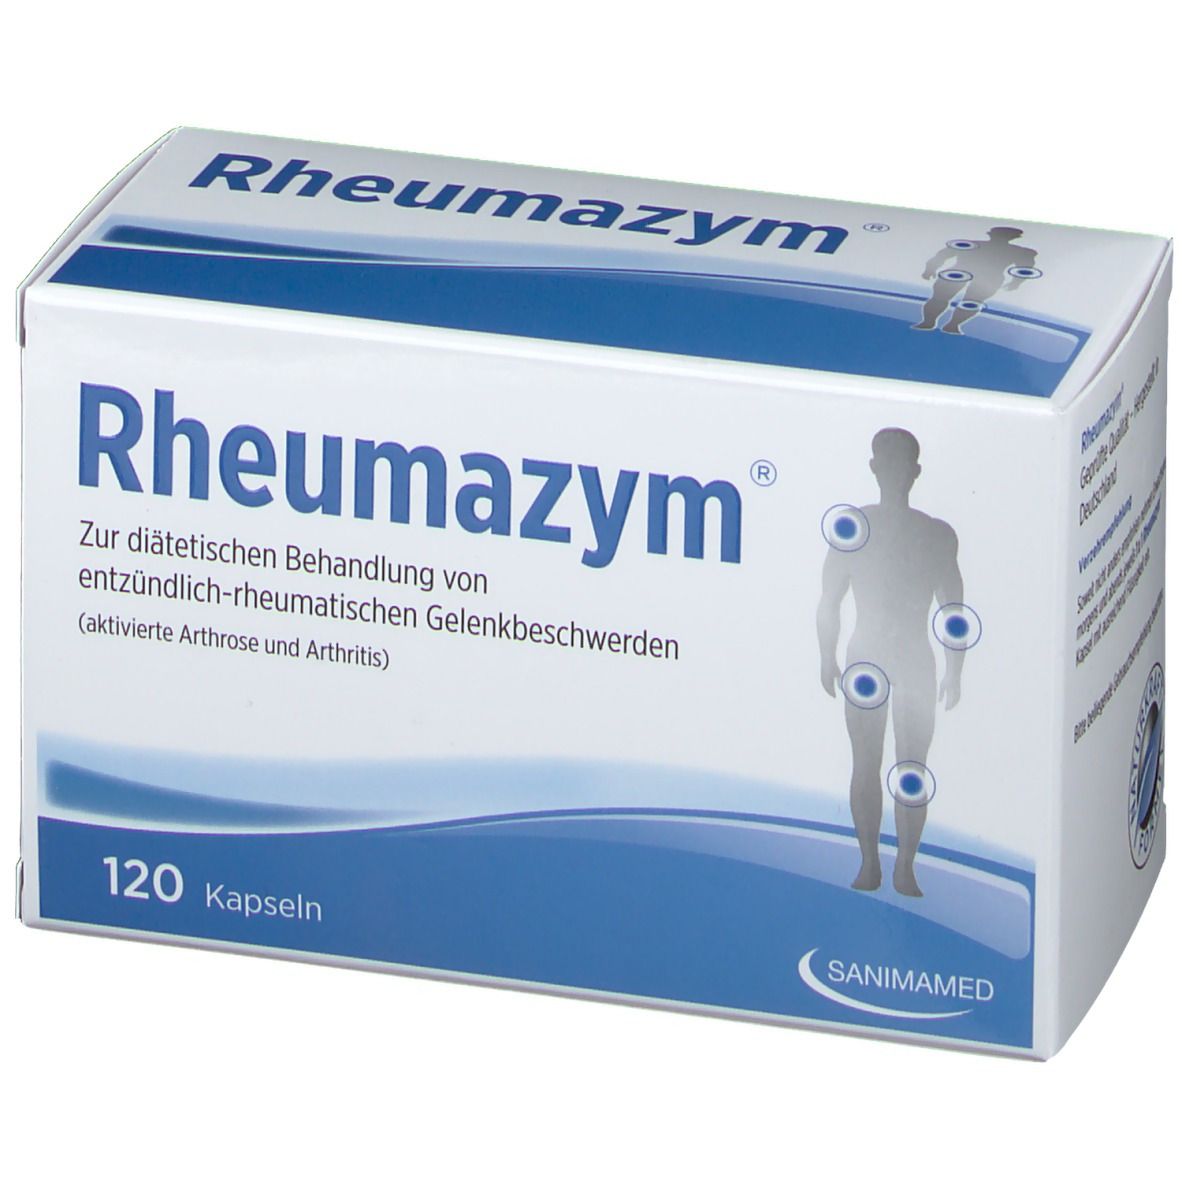 Rheumazym®